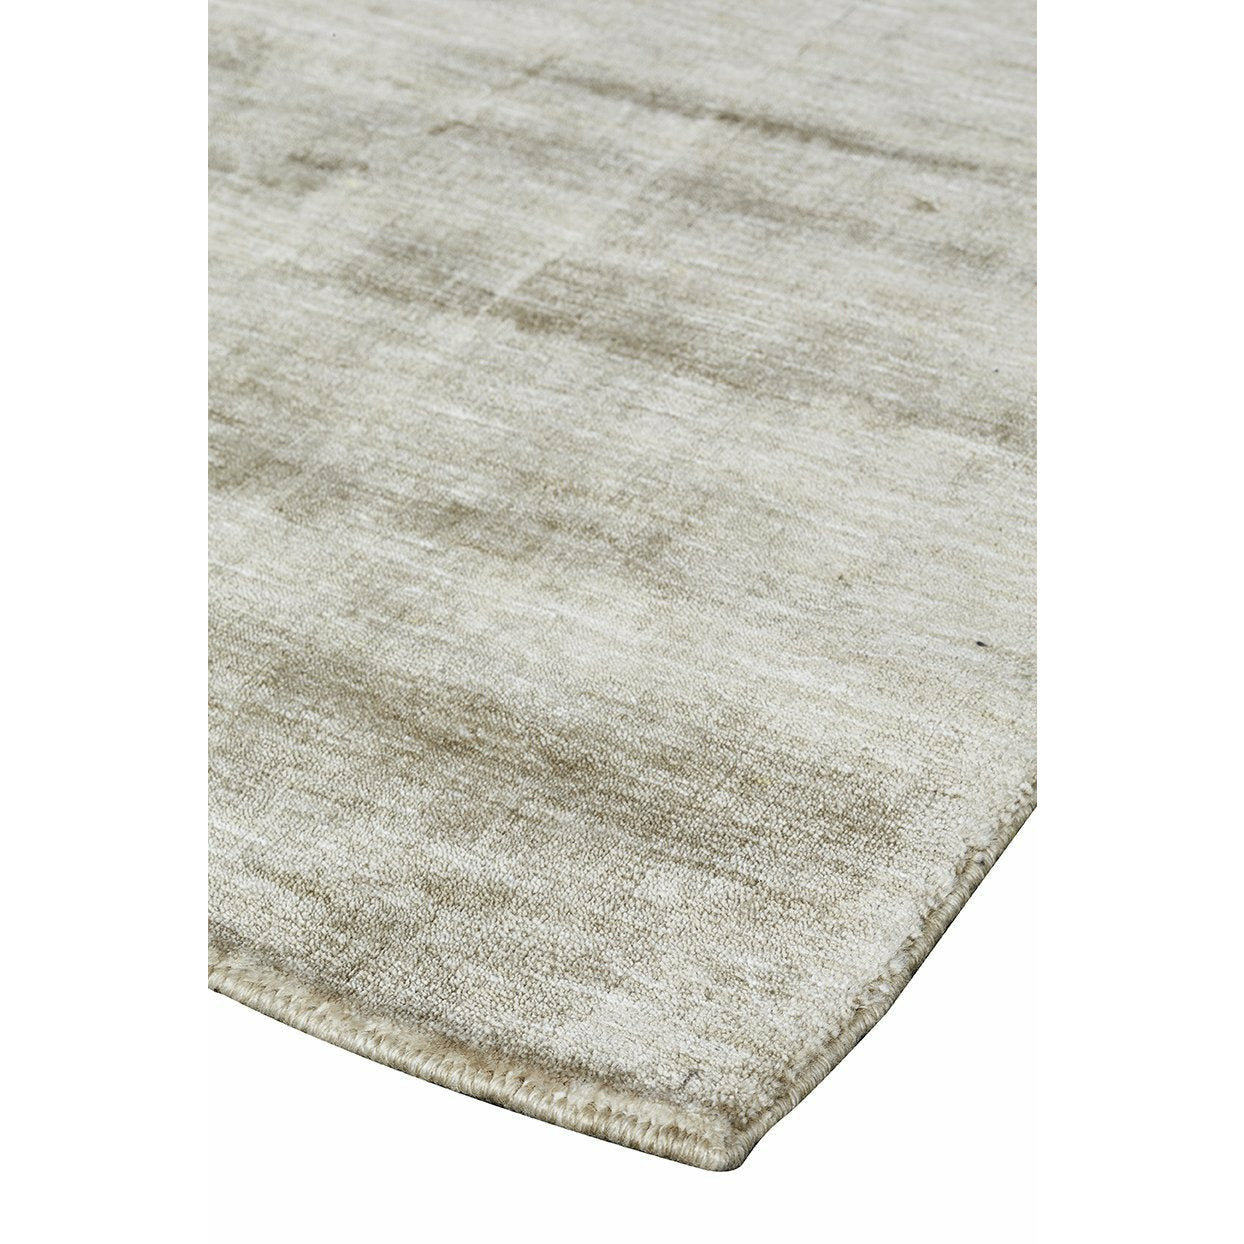 Massimo Bambu matto vaaleanruskea, 250x300 cm